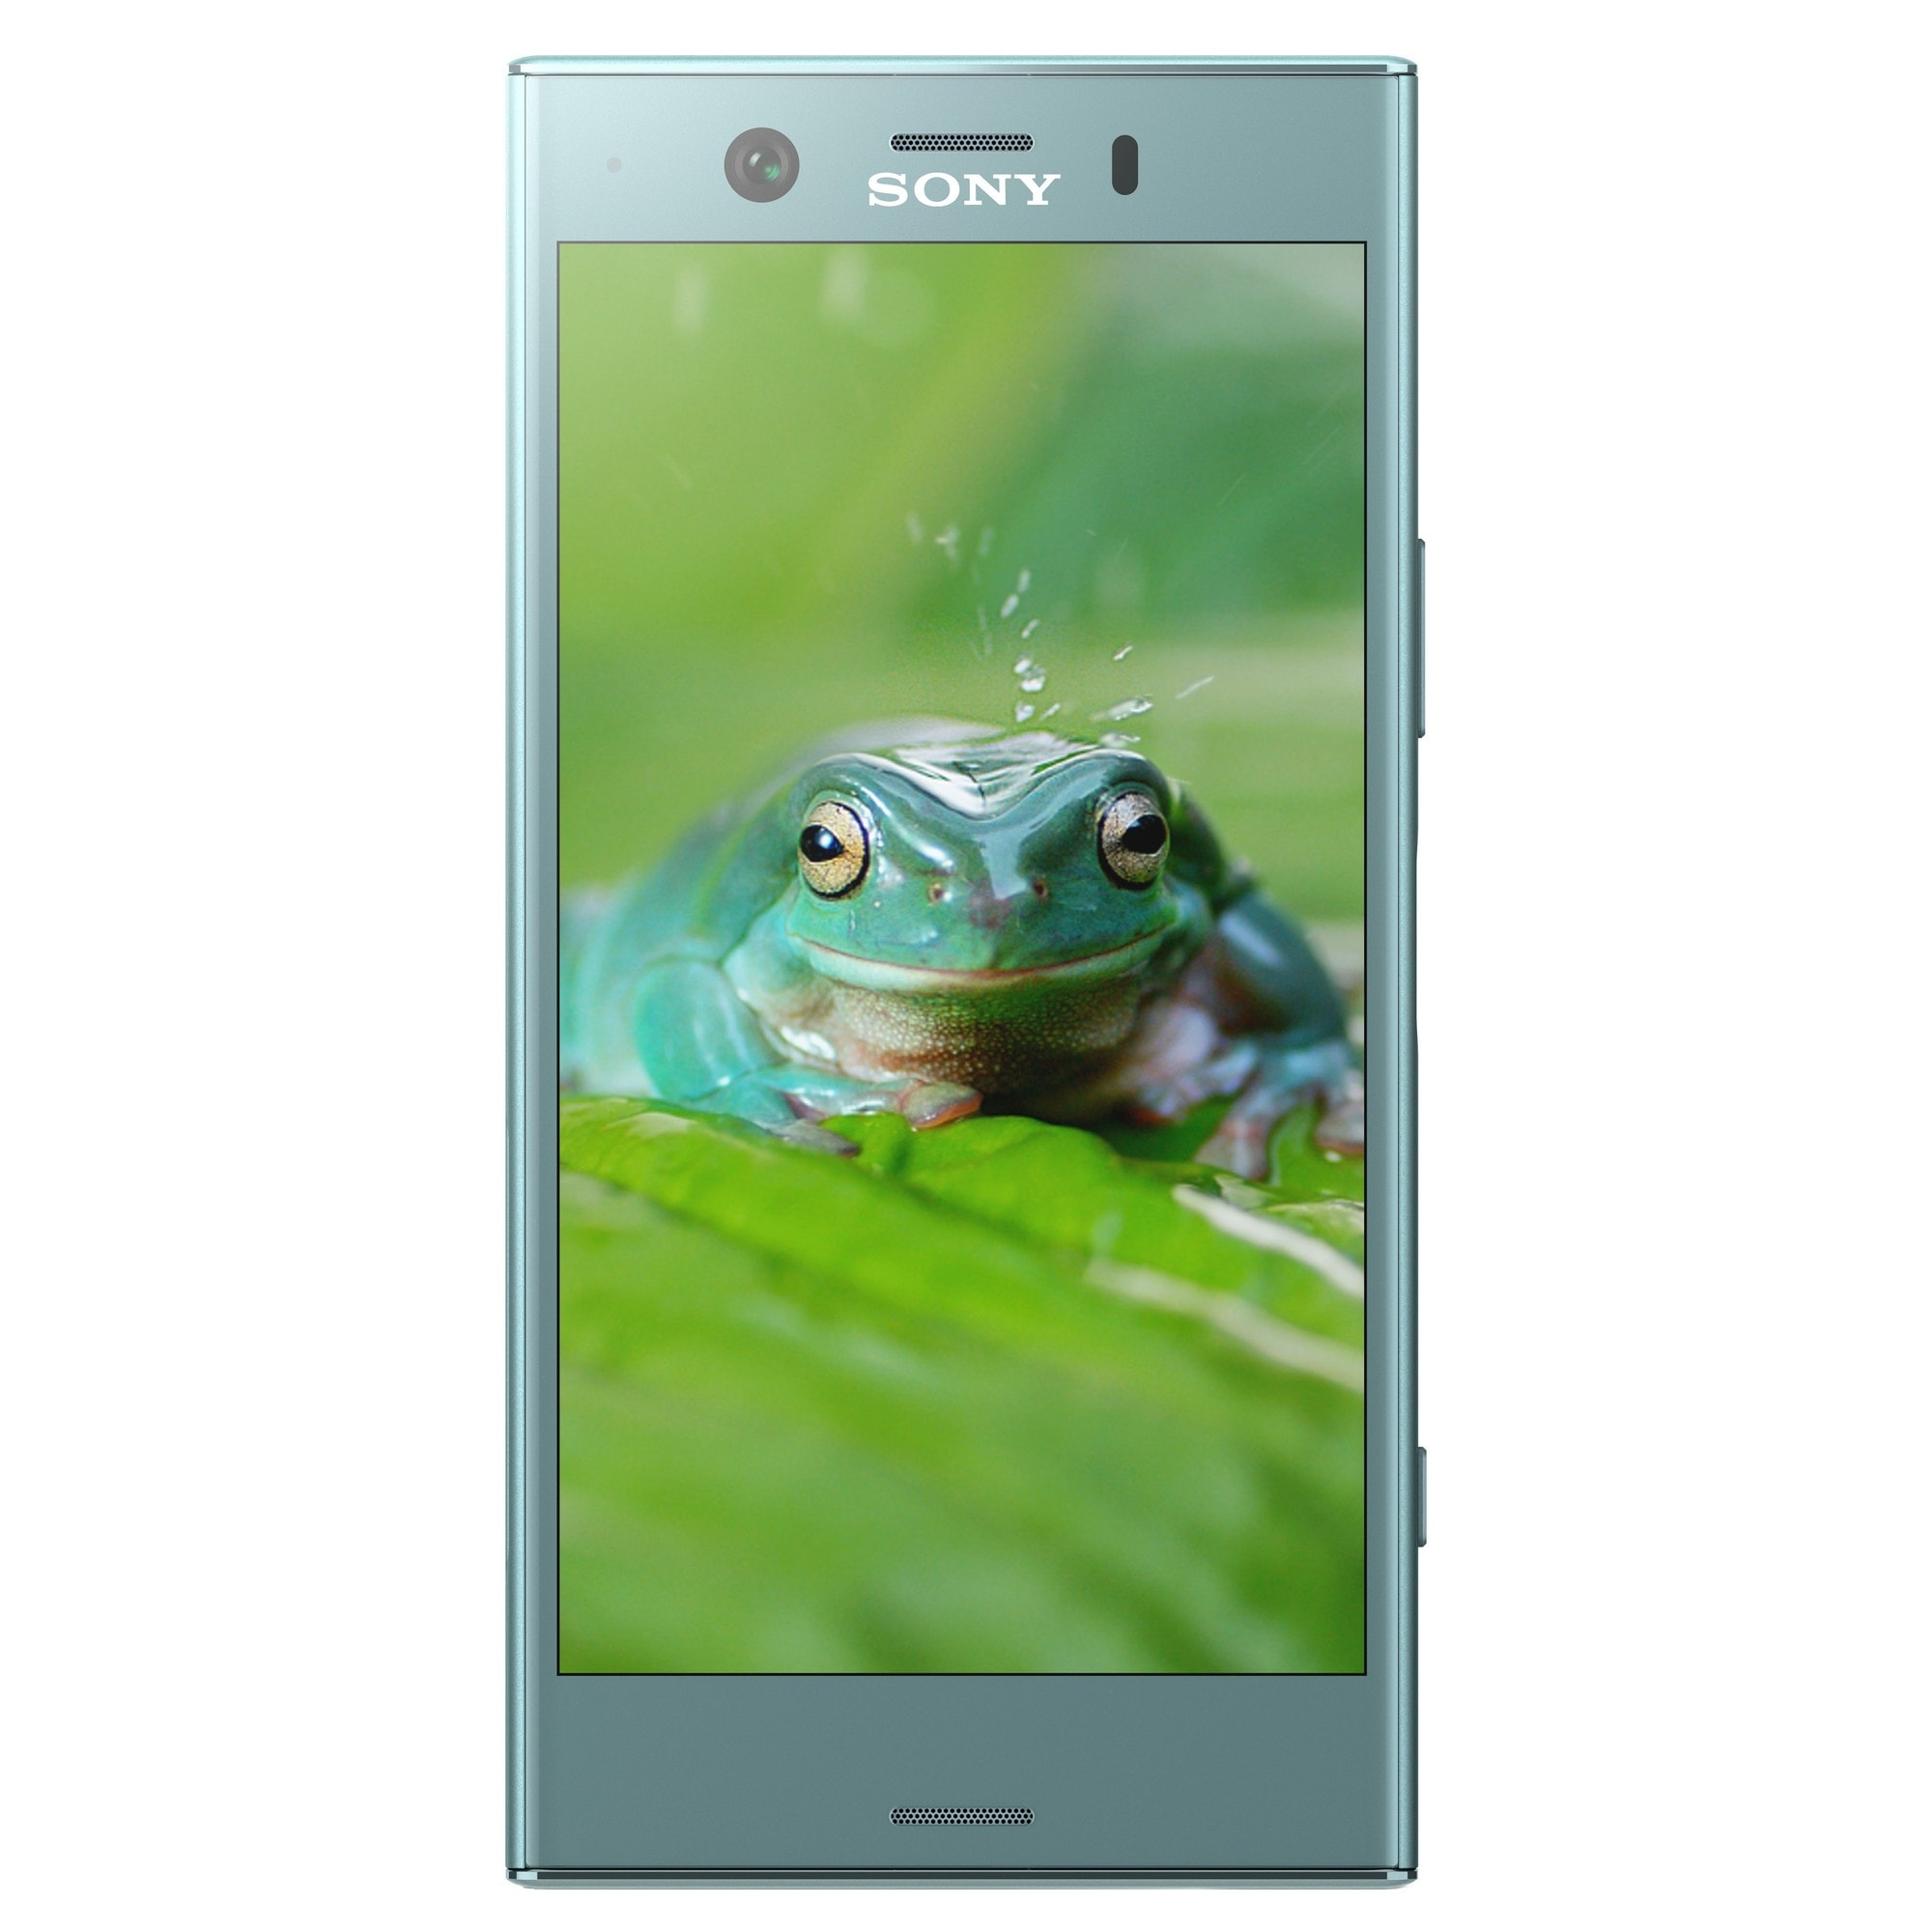 Sony Xperia XZ1 Compact smartphone (horisont blå) - Mobiltelefoner ...